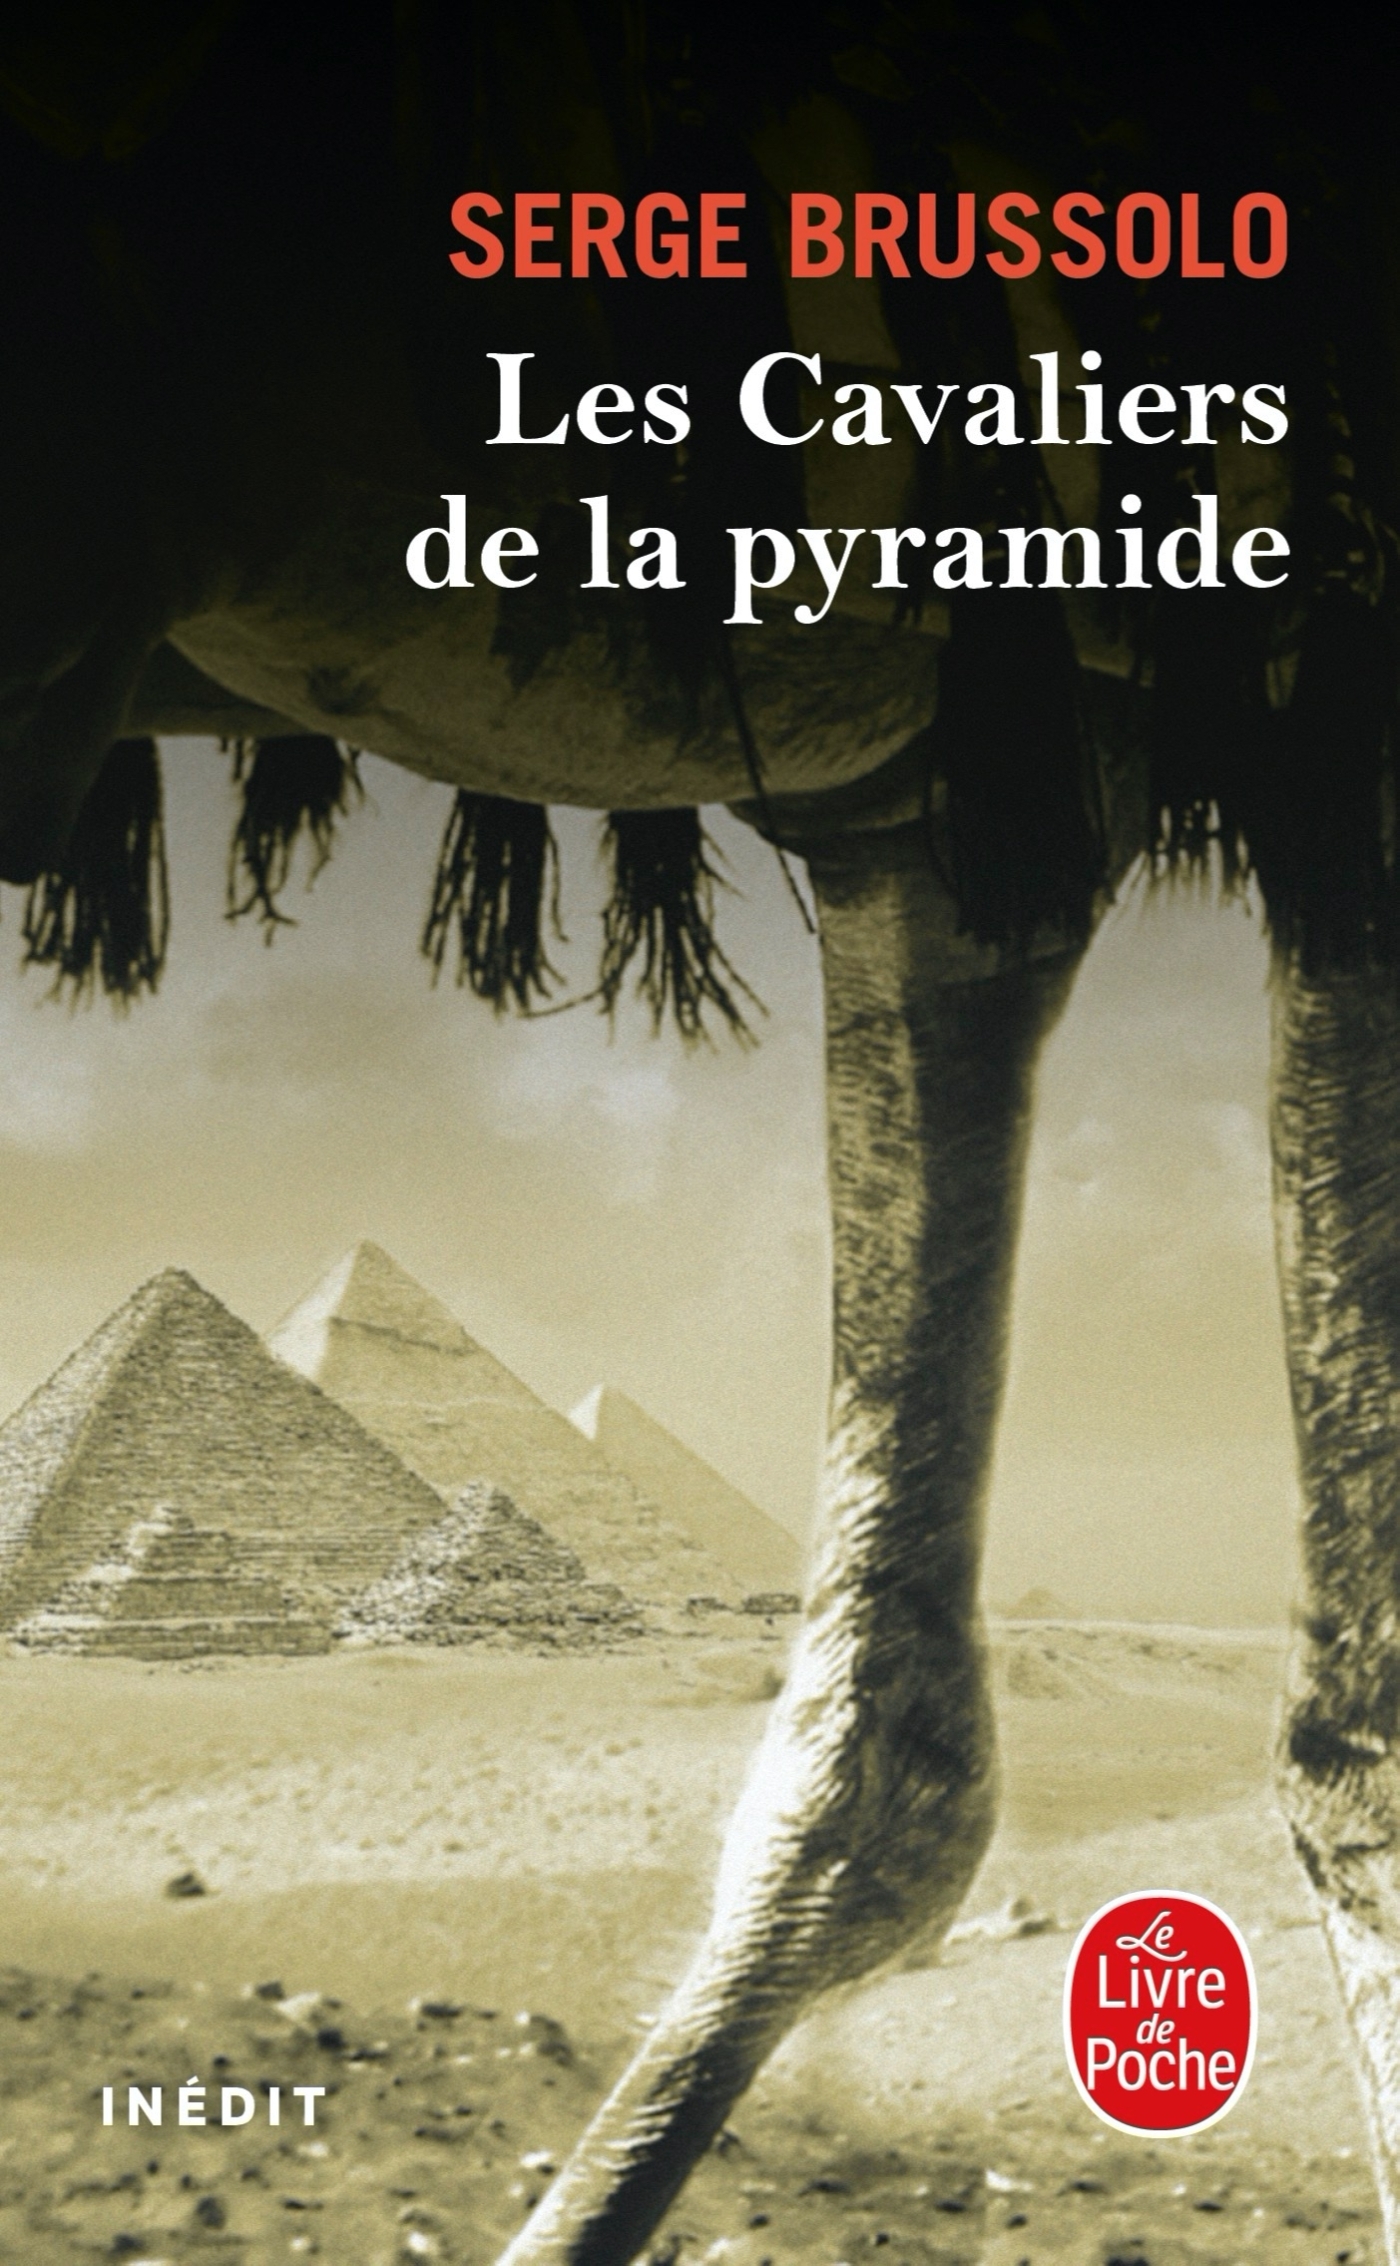 Les Cavaliers de la pyramide (Les Cavaliers de la pyramide, Tome 1) (9782253099192-front-cover)